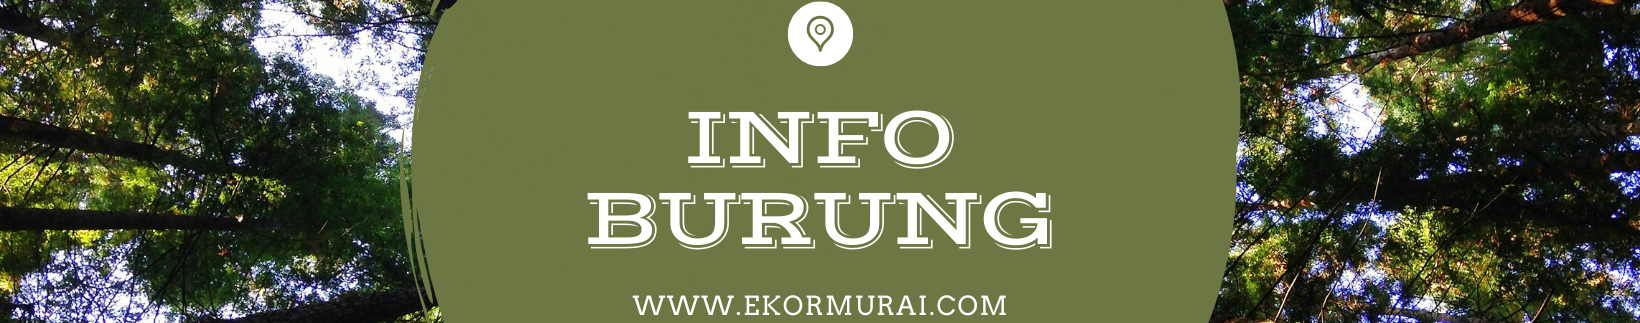 Ekor Murai's profile banner